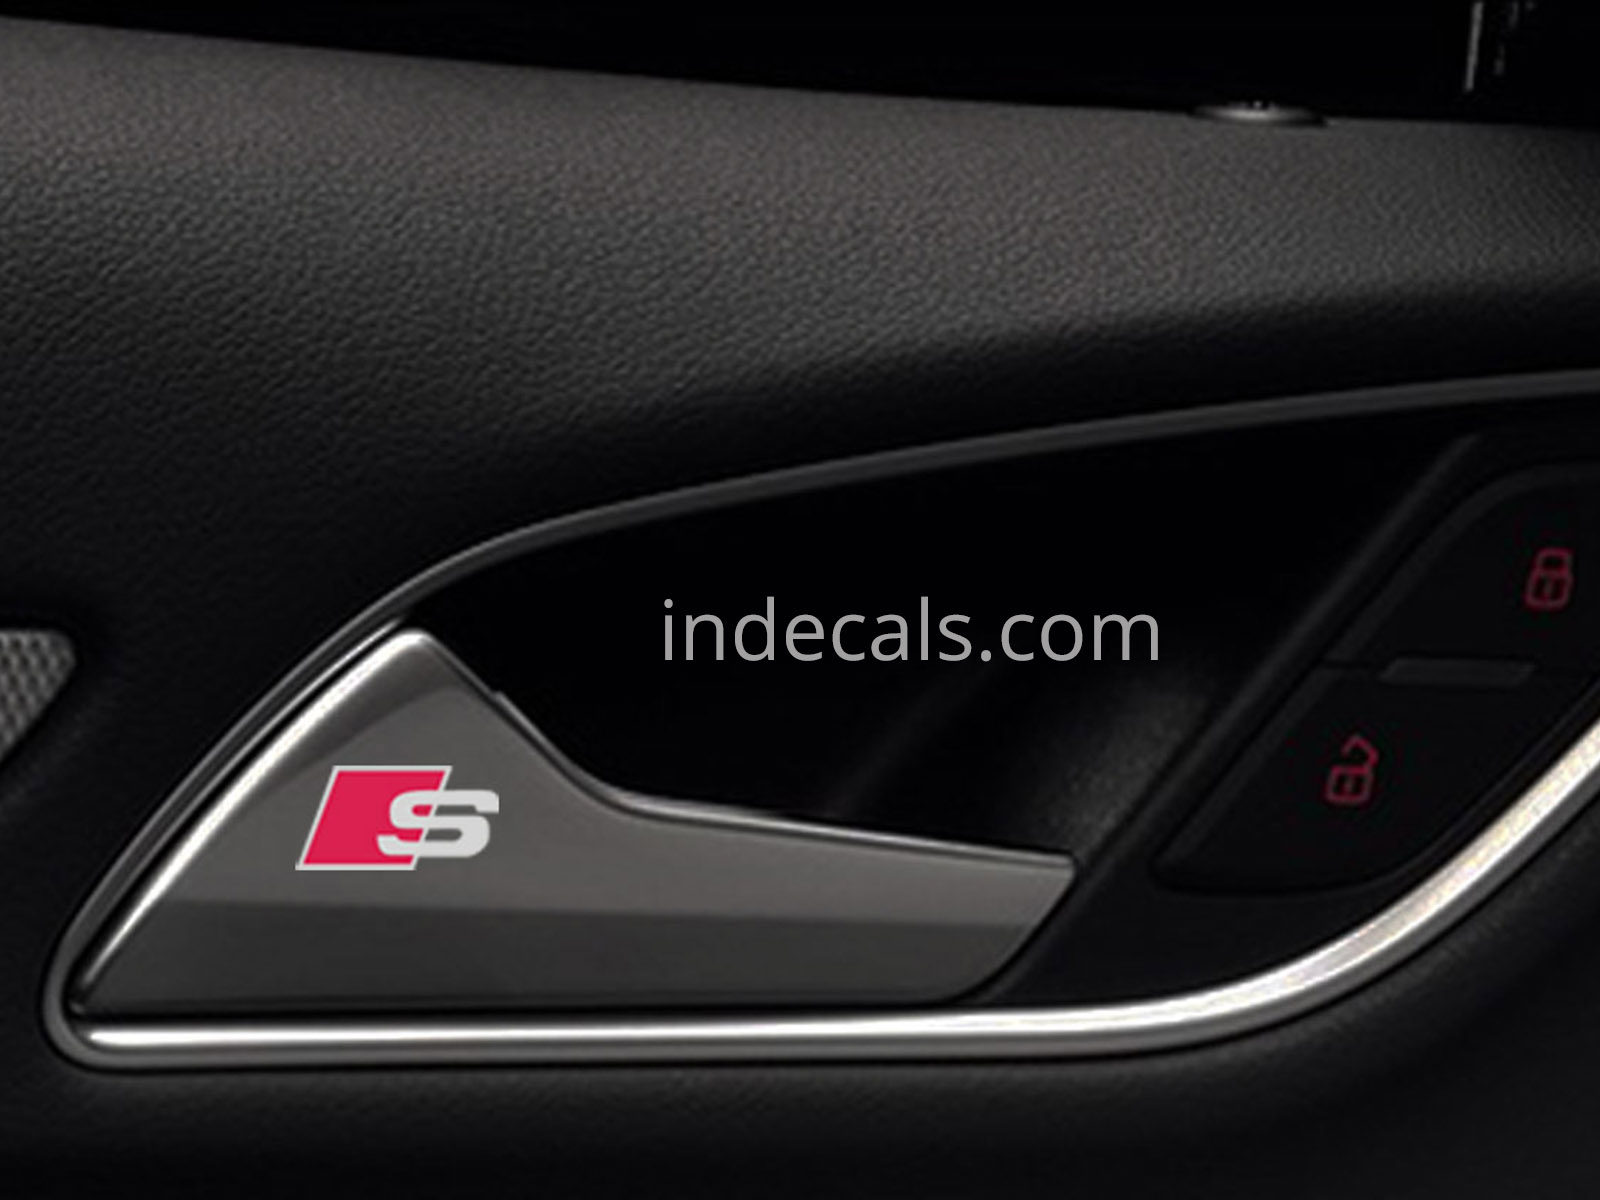 2 x Audi S-Line Stickers for Interior Door Handles - Silver + Red